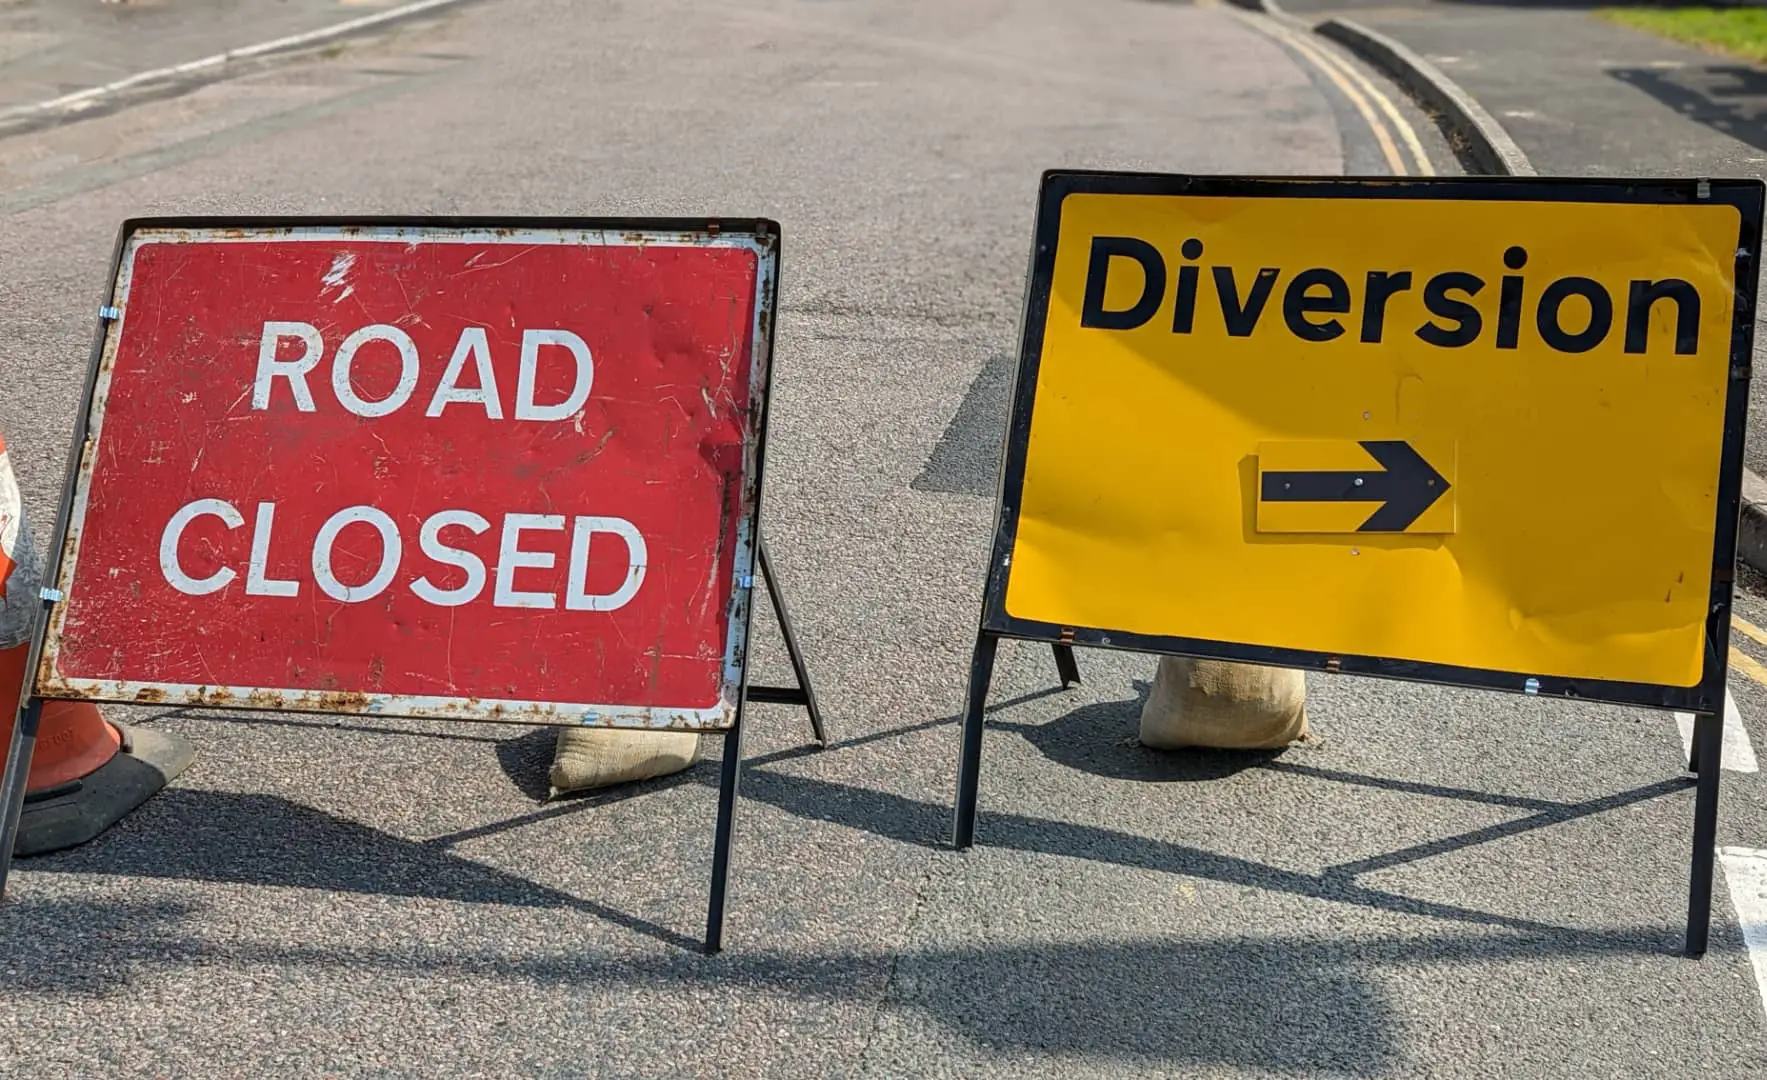 Road diversion signs